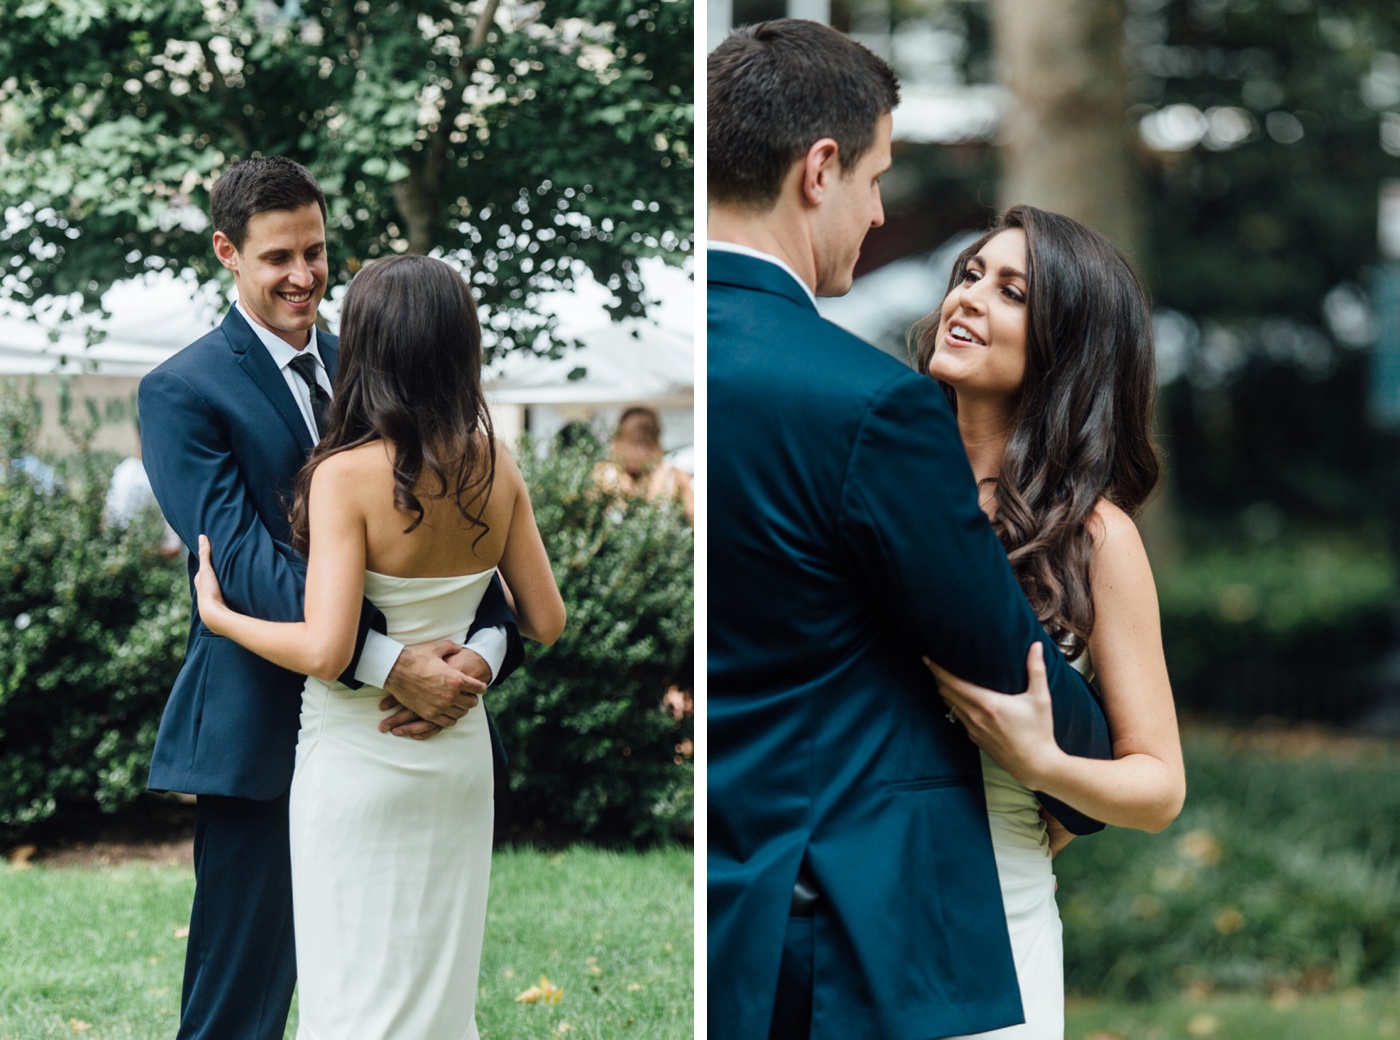 Jessica + Chuck - Rittenhouse Square First Look - Philadelphia Wedding Photographer - Alison Dunn Photography photo